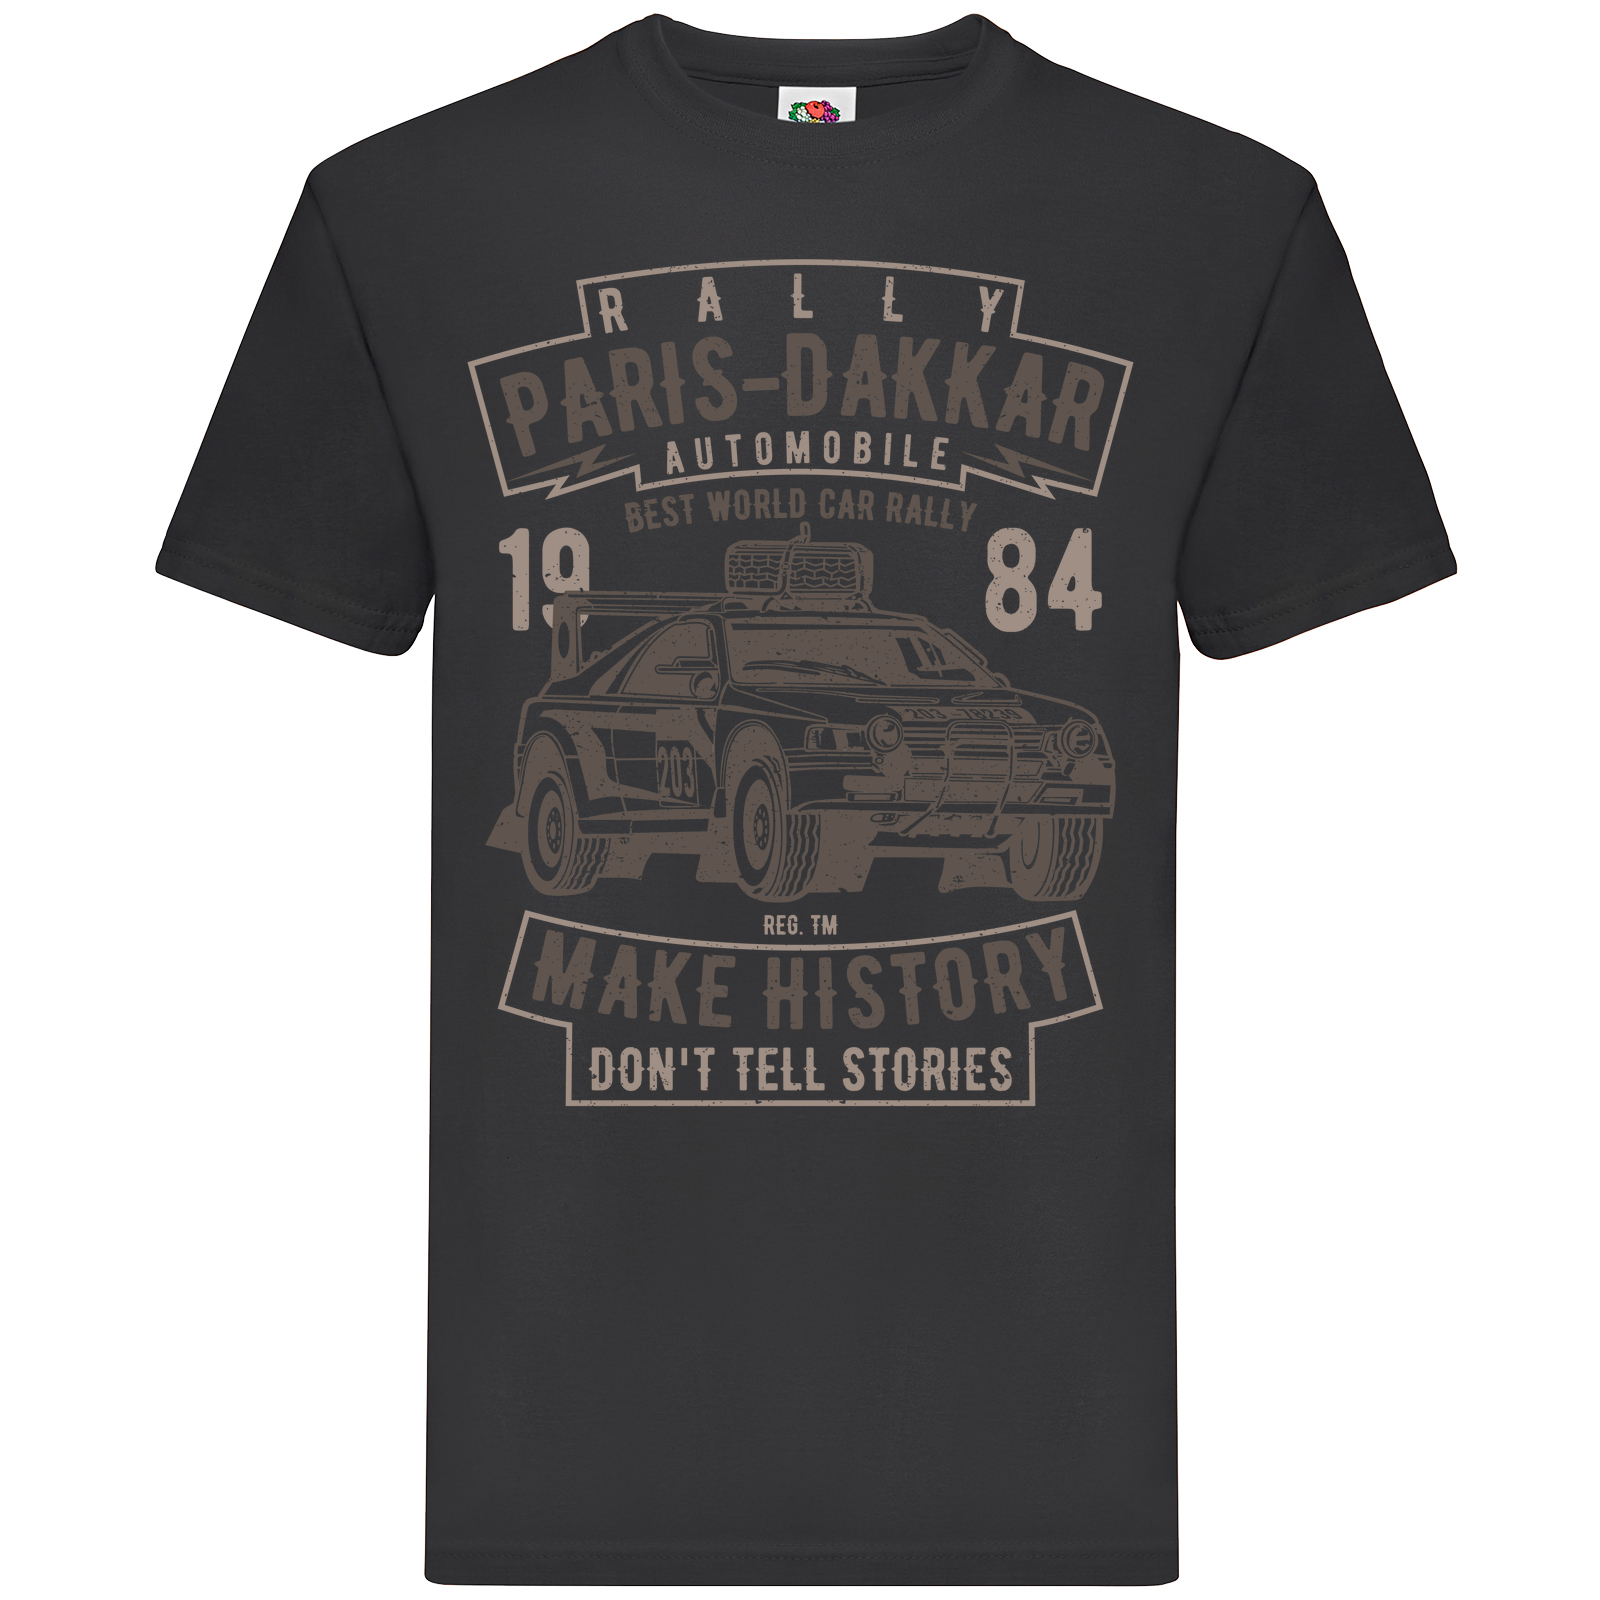 Rally Paris Dakar Automobile t-shirt | eBay